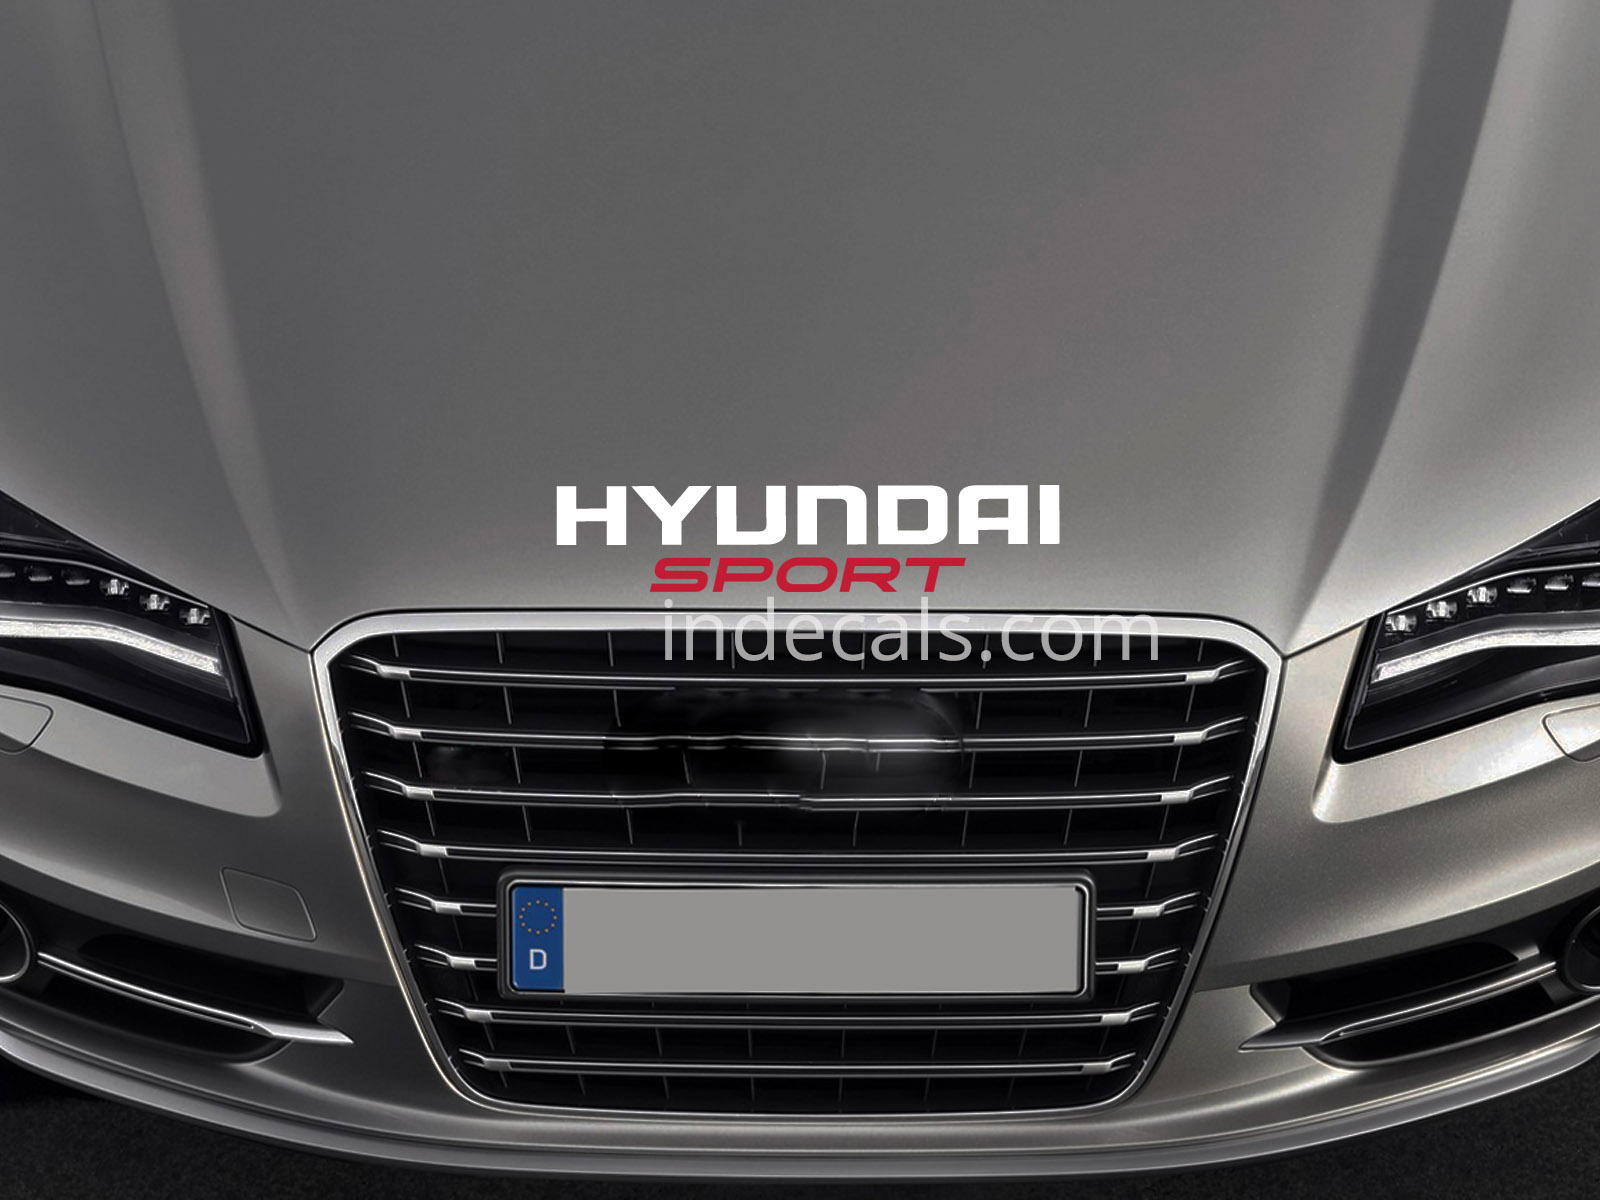 1 x Hyundai Sport Sticker for Bonnet - White & Red